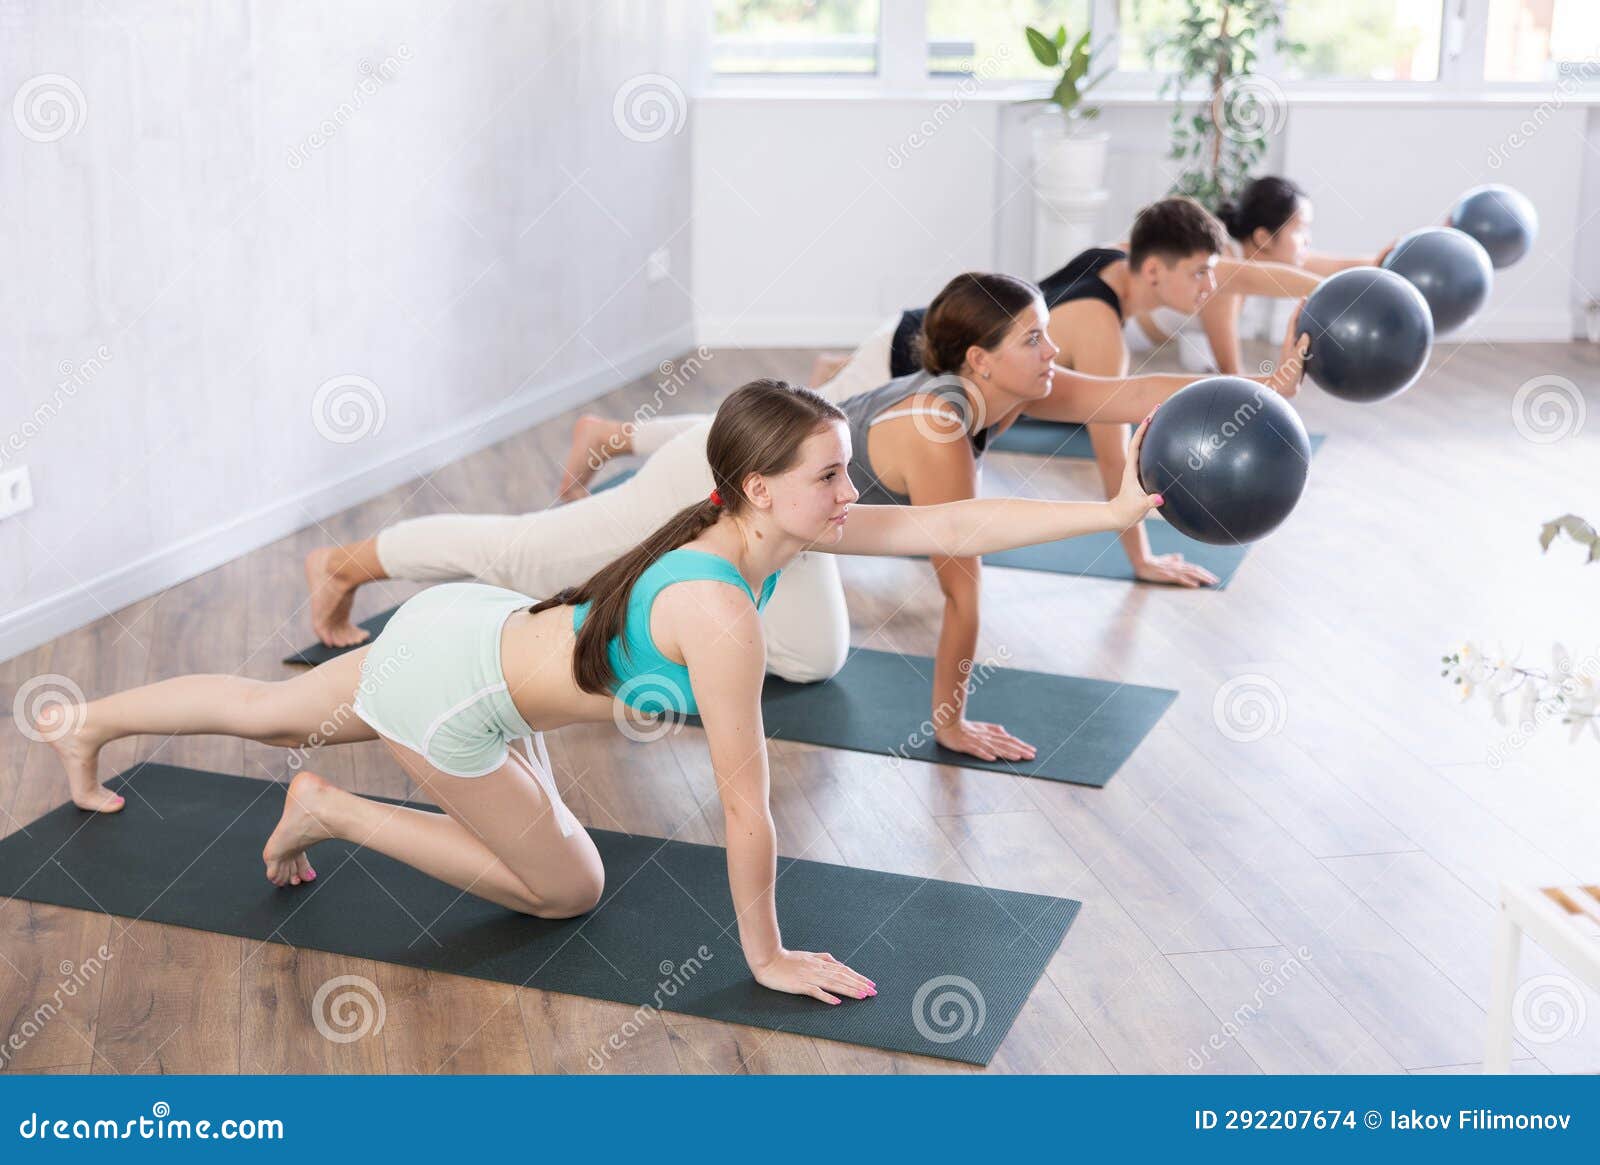 Group of Young People Doing Softball Pilates. Stock Photo - Image of  balanced, health: 292207674